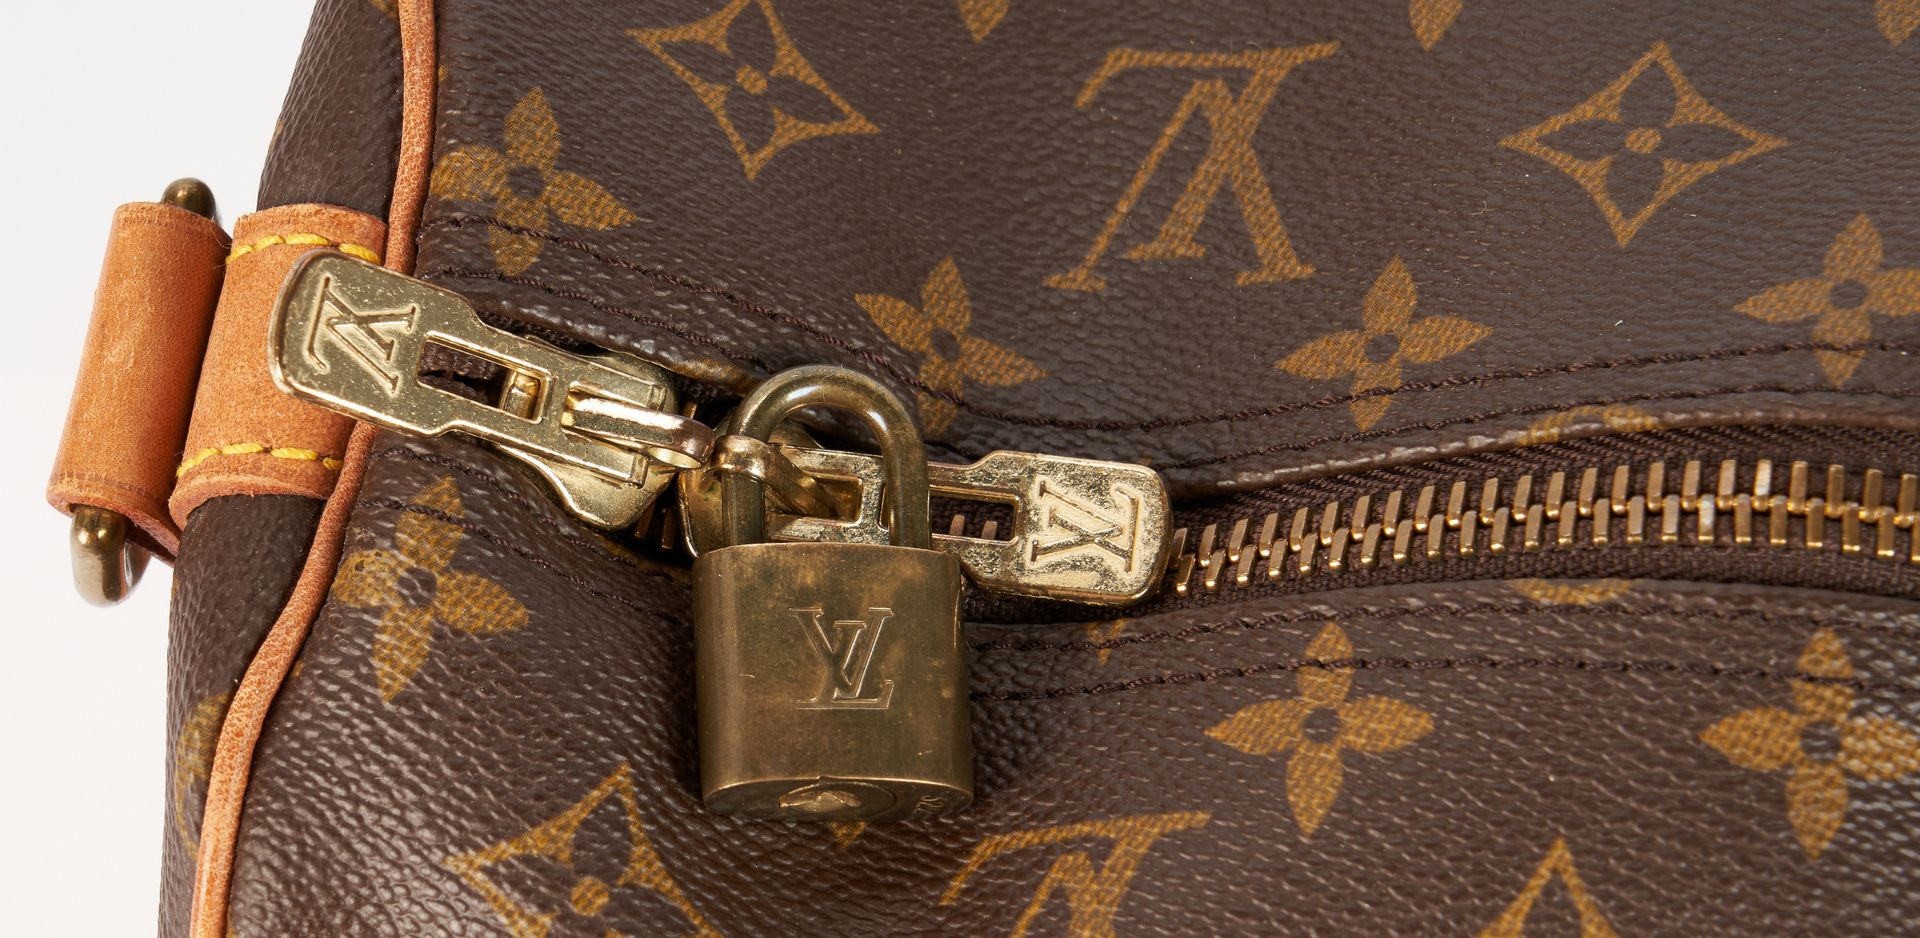 Lot 708: Louis Vuitton Keepall Duffle Bag